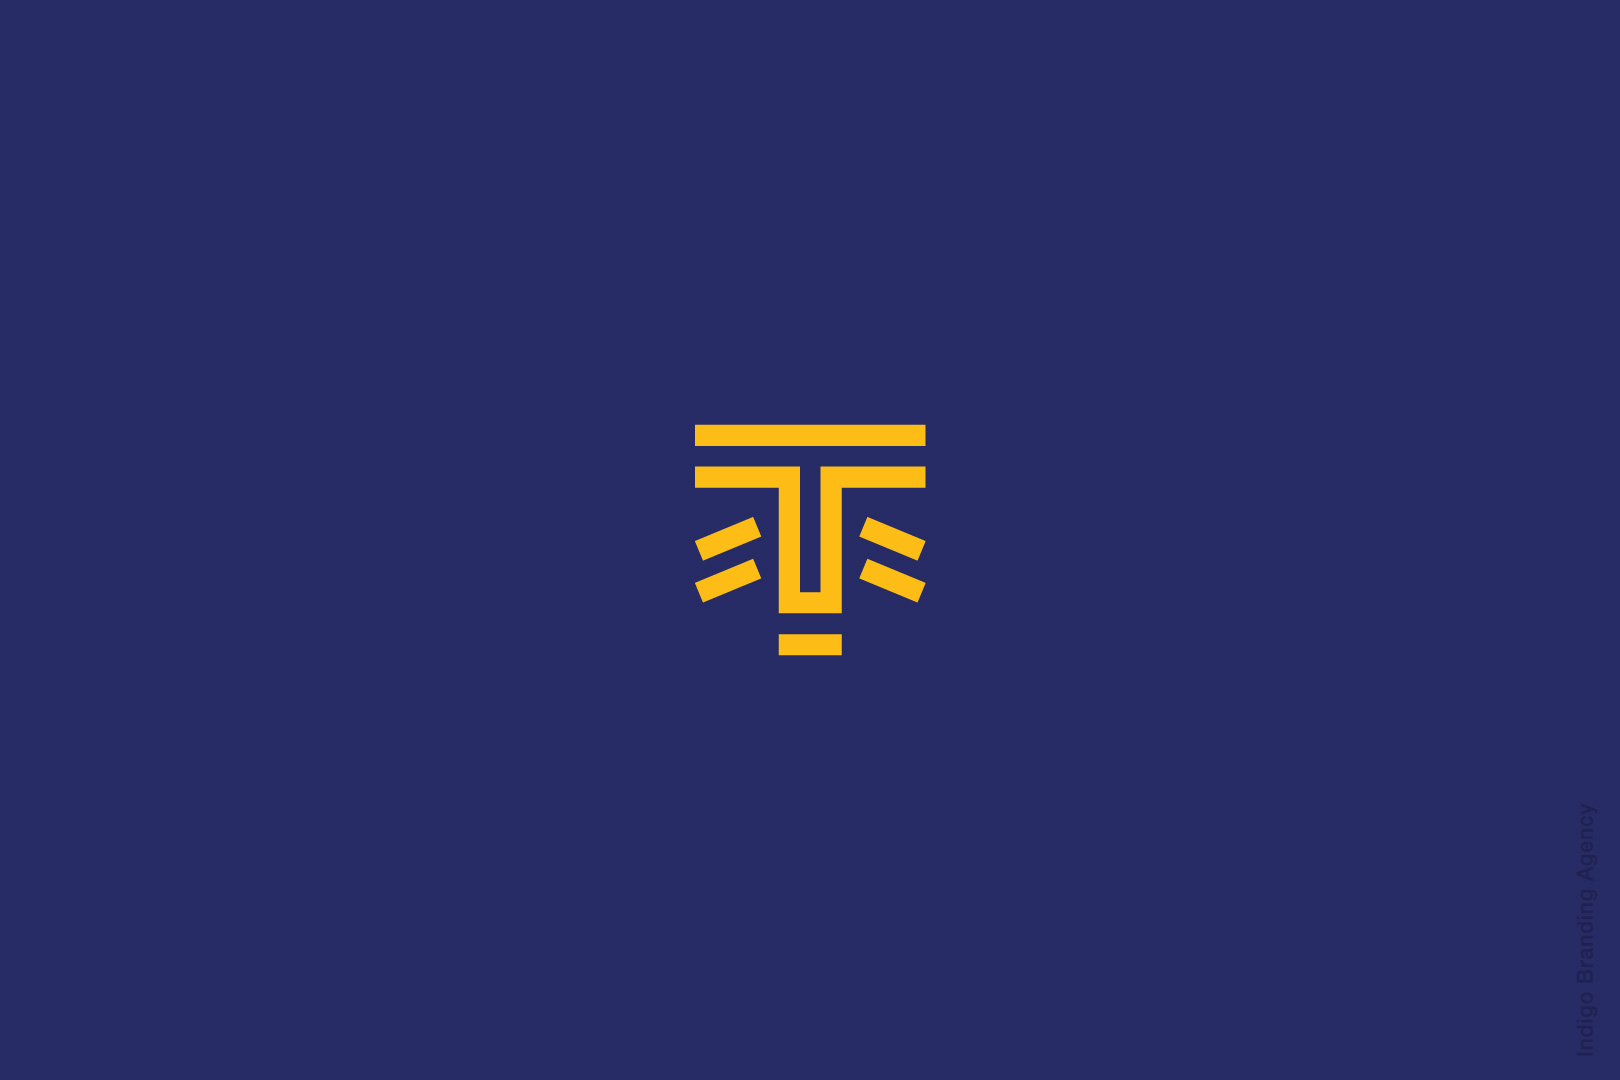 TipTribes branding and logo design by Indigo branding